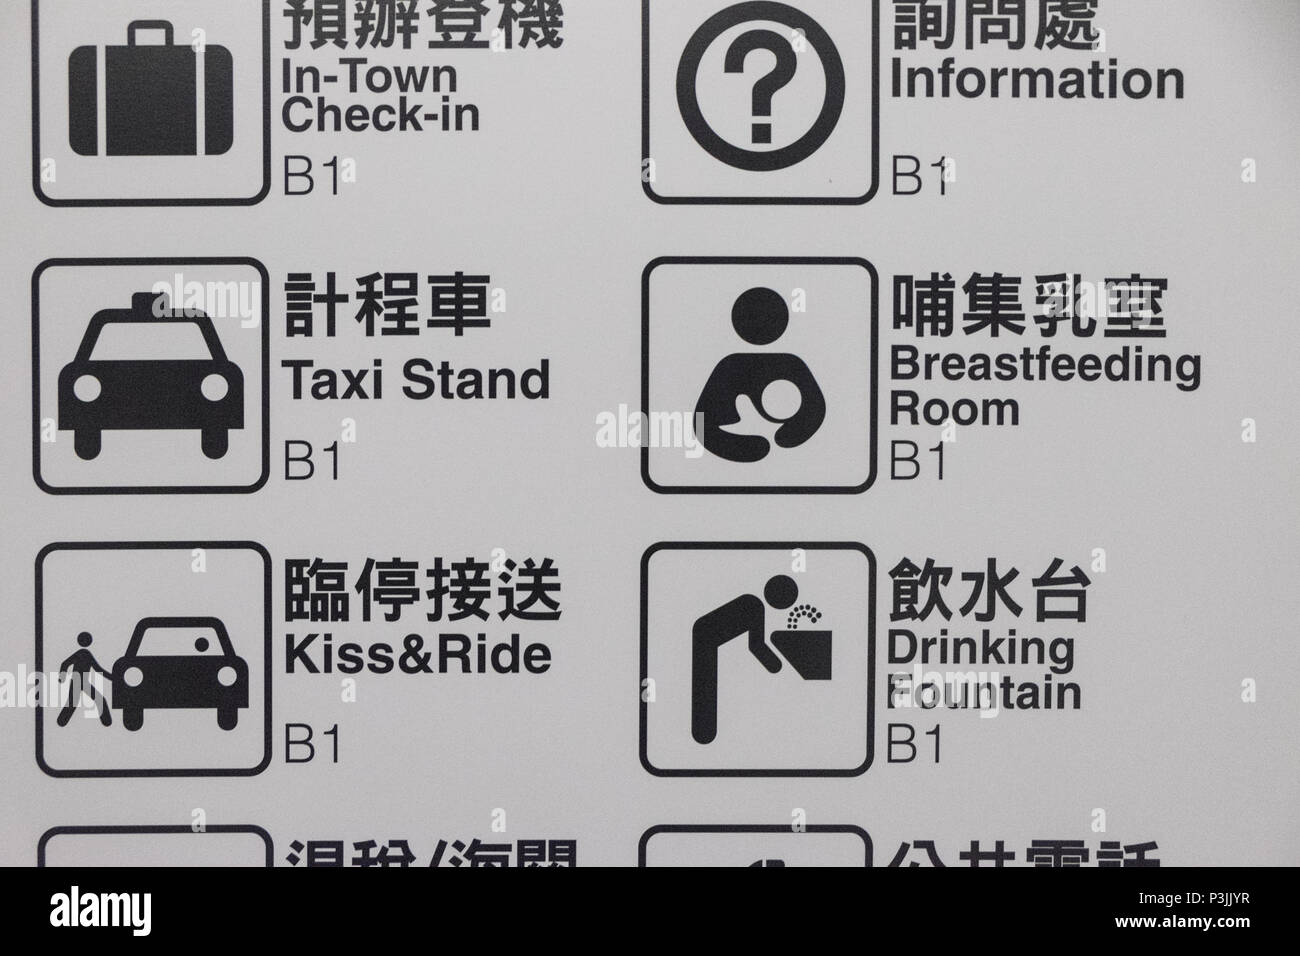 Information,board,kiss and ride,breastfeeding,room,at Taoyuan, Airport,Taipei,Taiwan,Republic of China,ROC,China,Chinese,Asia,Asian, Stock Photo